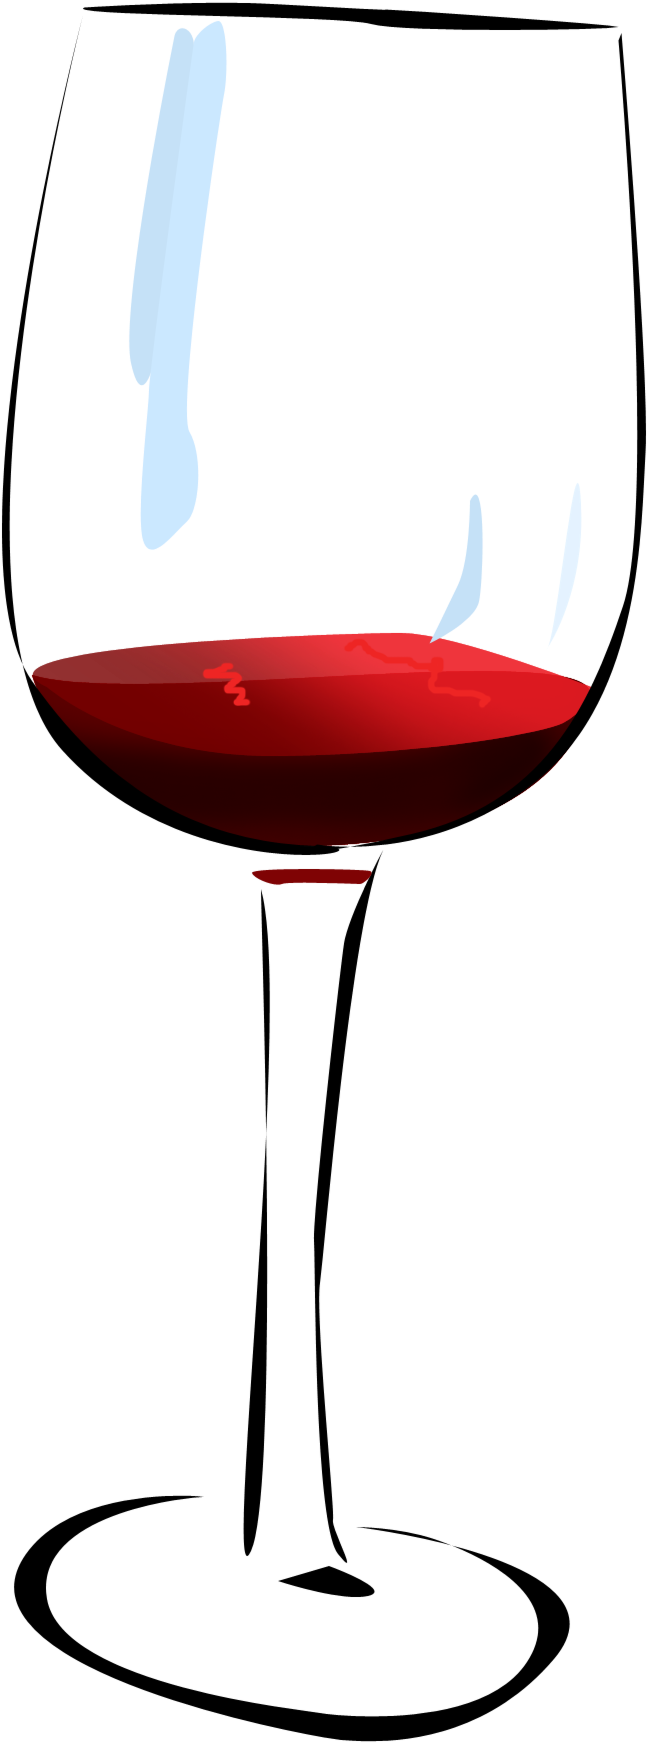 Wineglass Simple Illustration By Stridermelnik Wineglass - Illustration (774x1851)